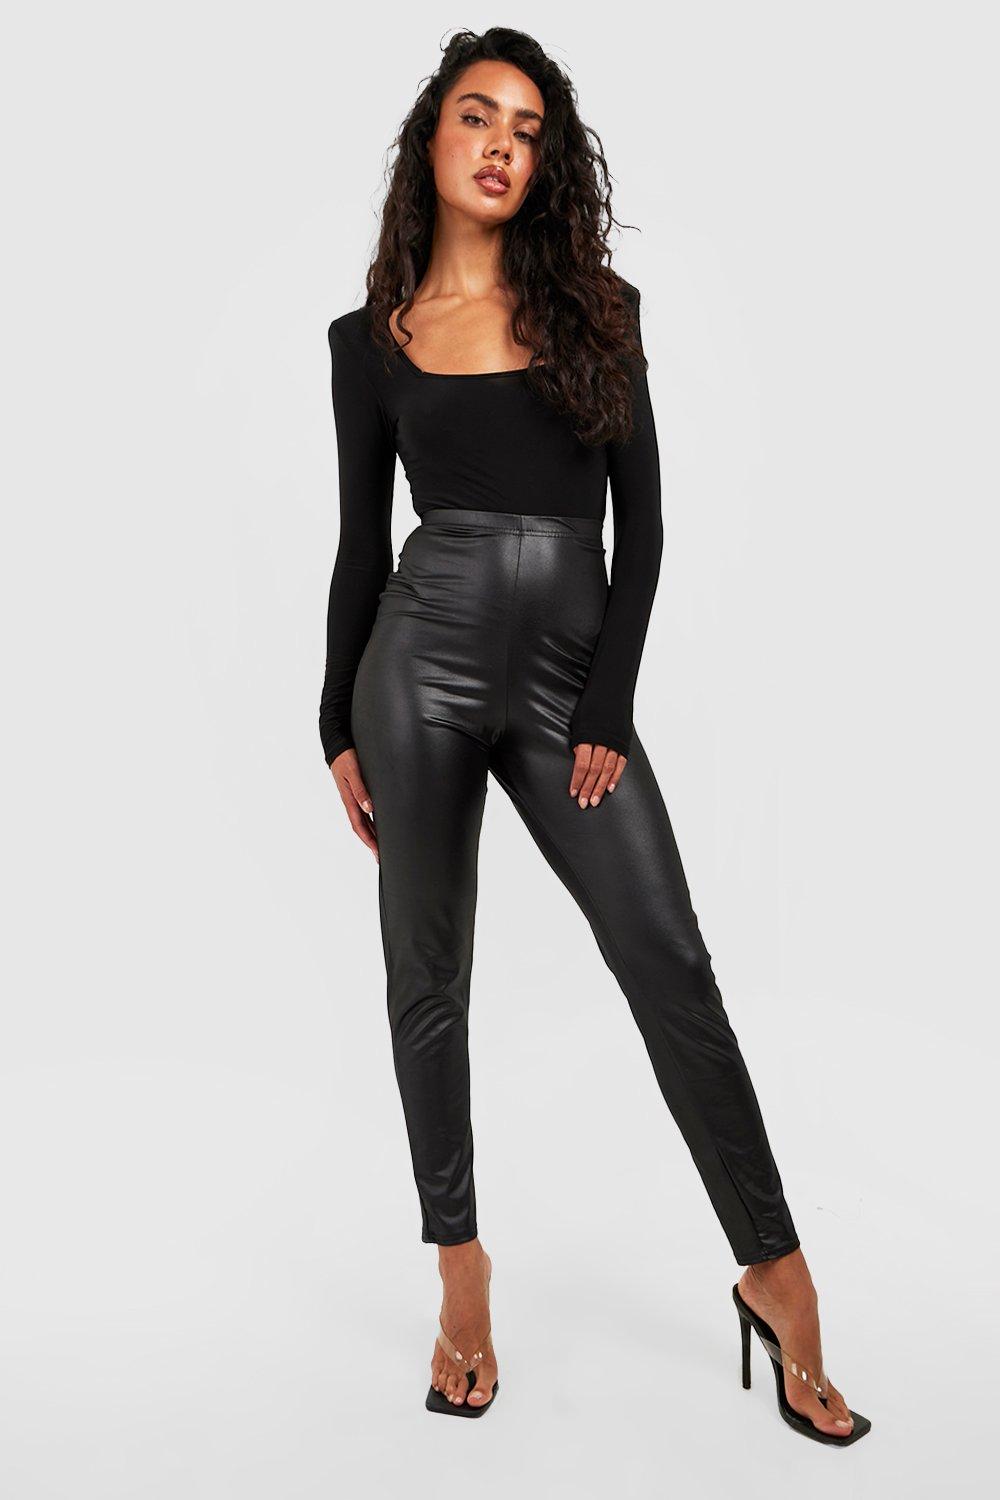 https://media.boohoo.com/i/boohoo/dzz01407_black_xl_2/female-black-high-waisted-leather-look-leggings